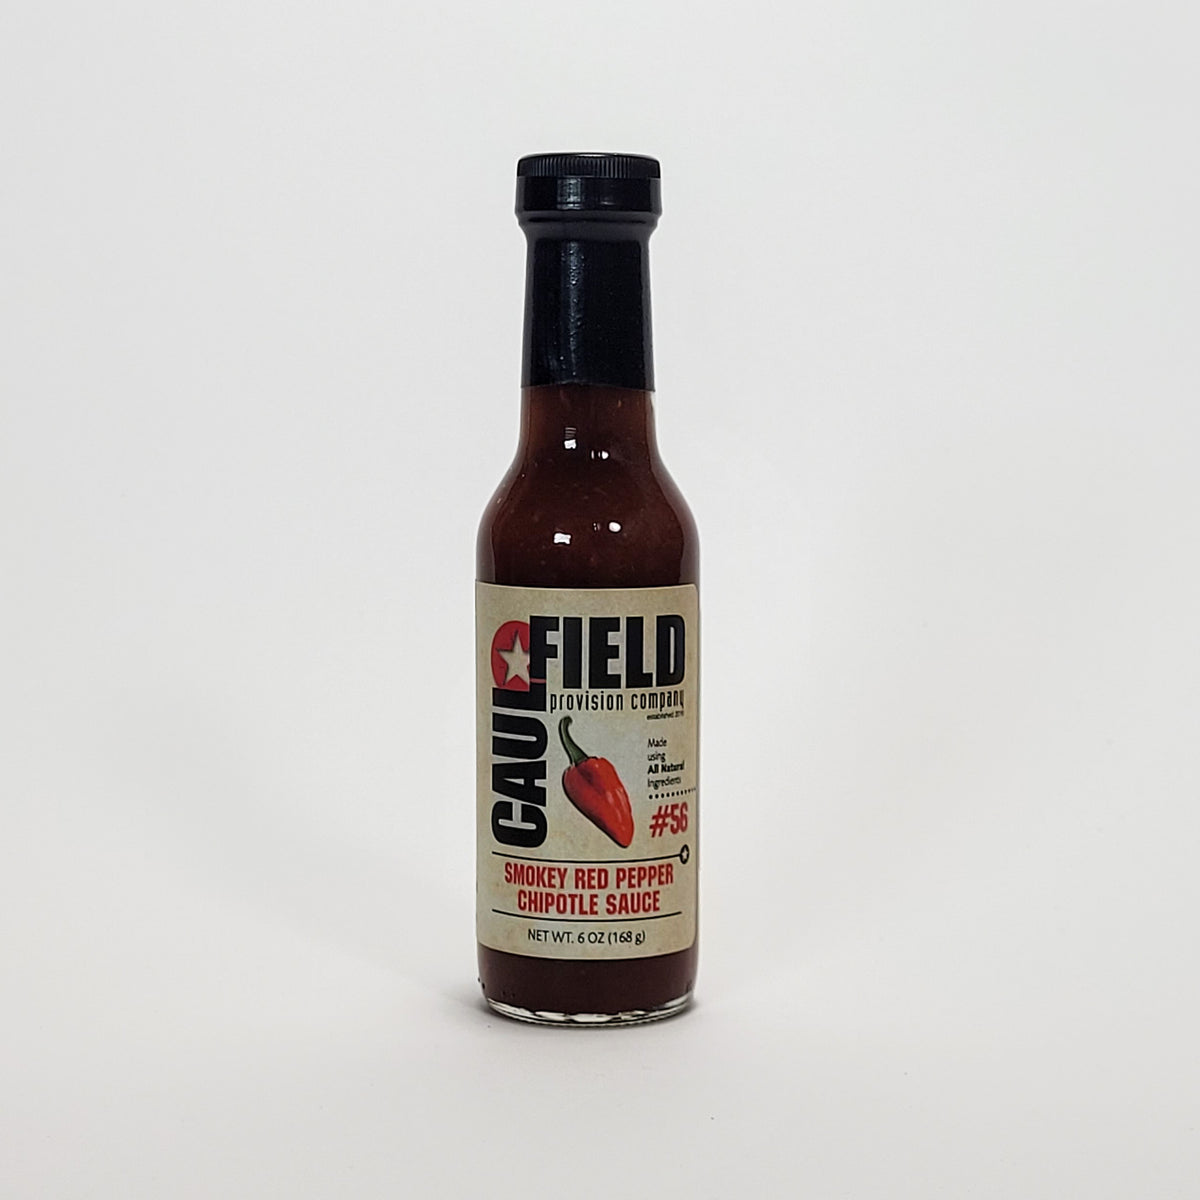 Caulfield Provision Smokey Red Pepper Chipotle Sauce #56 hot sauce